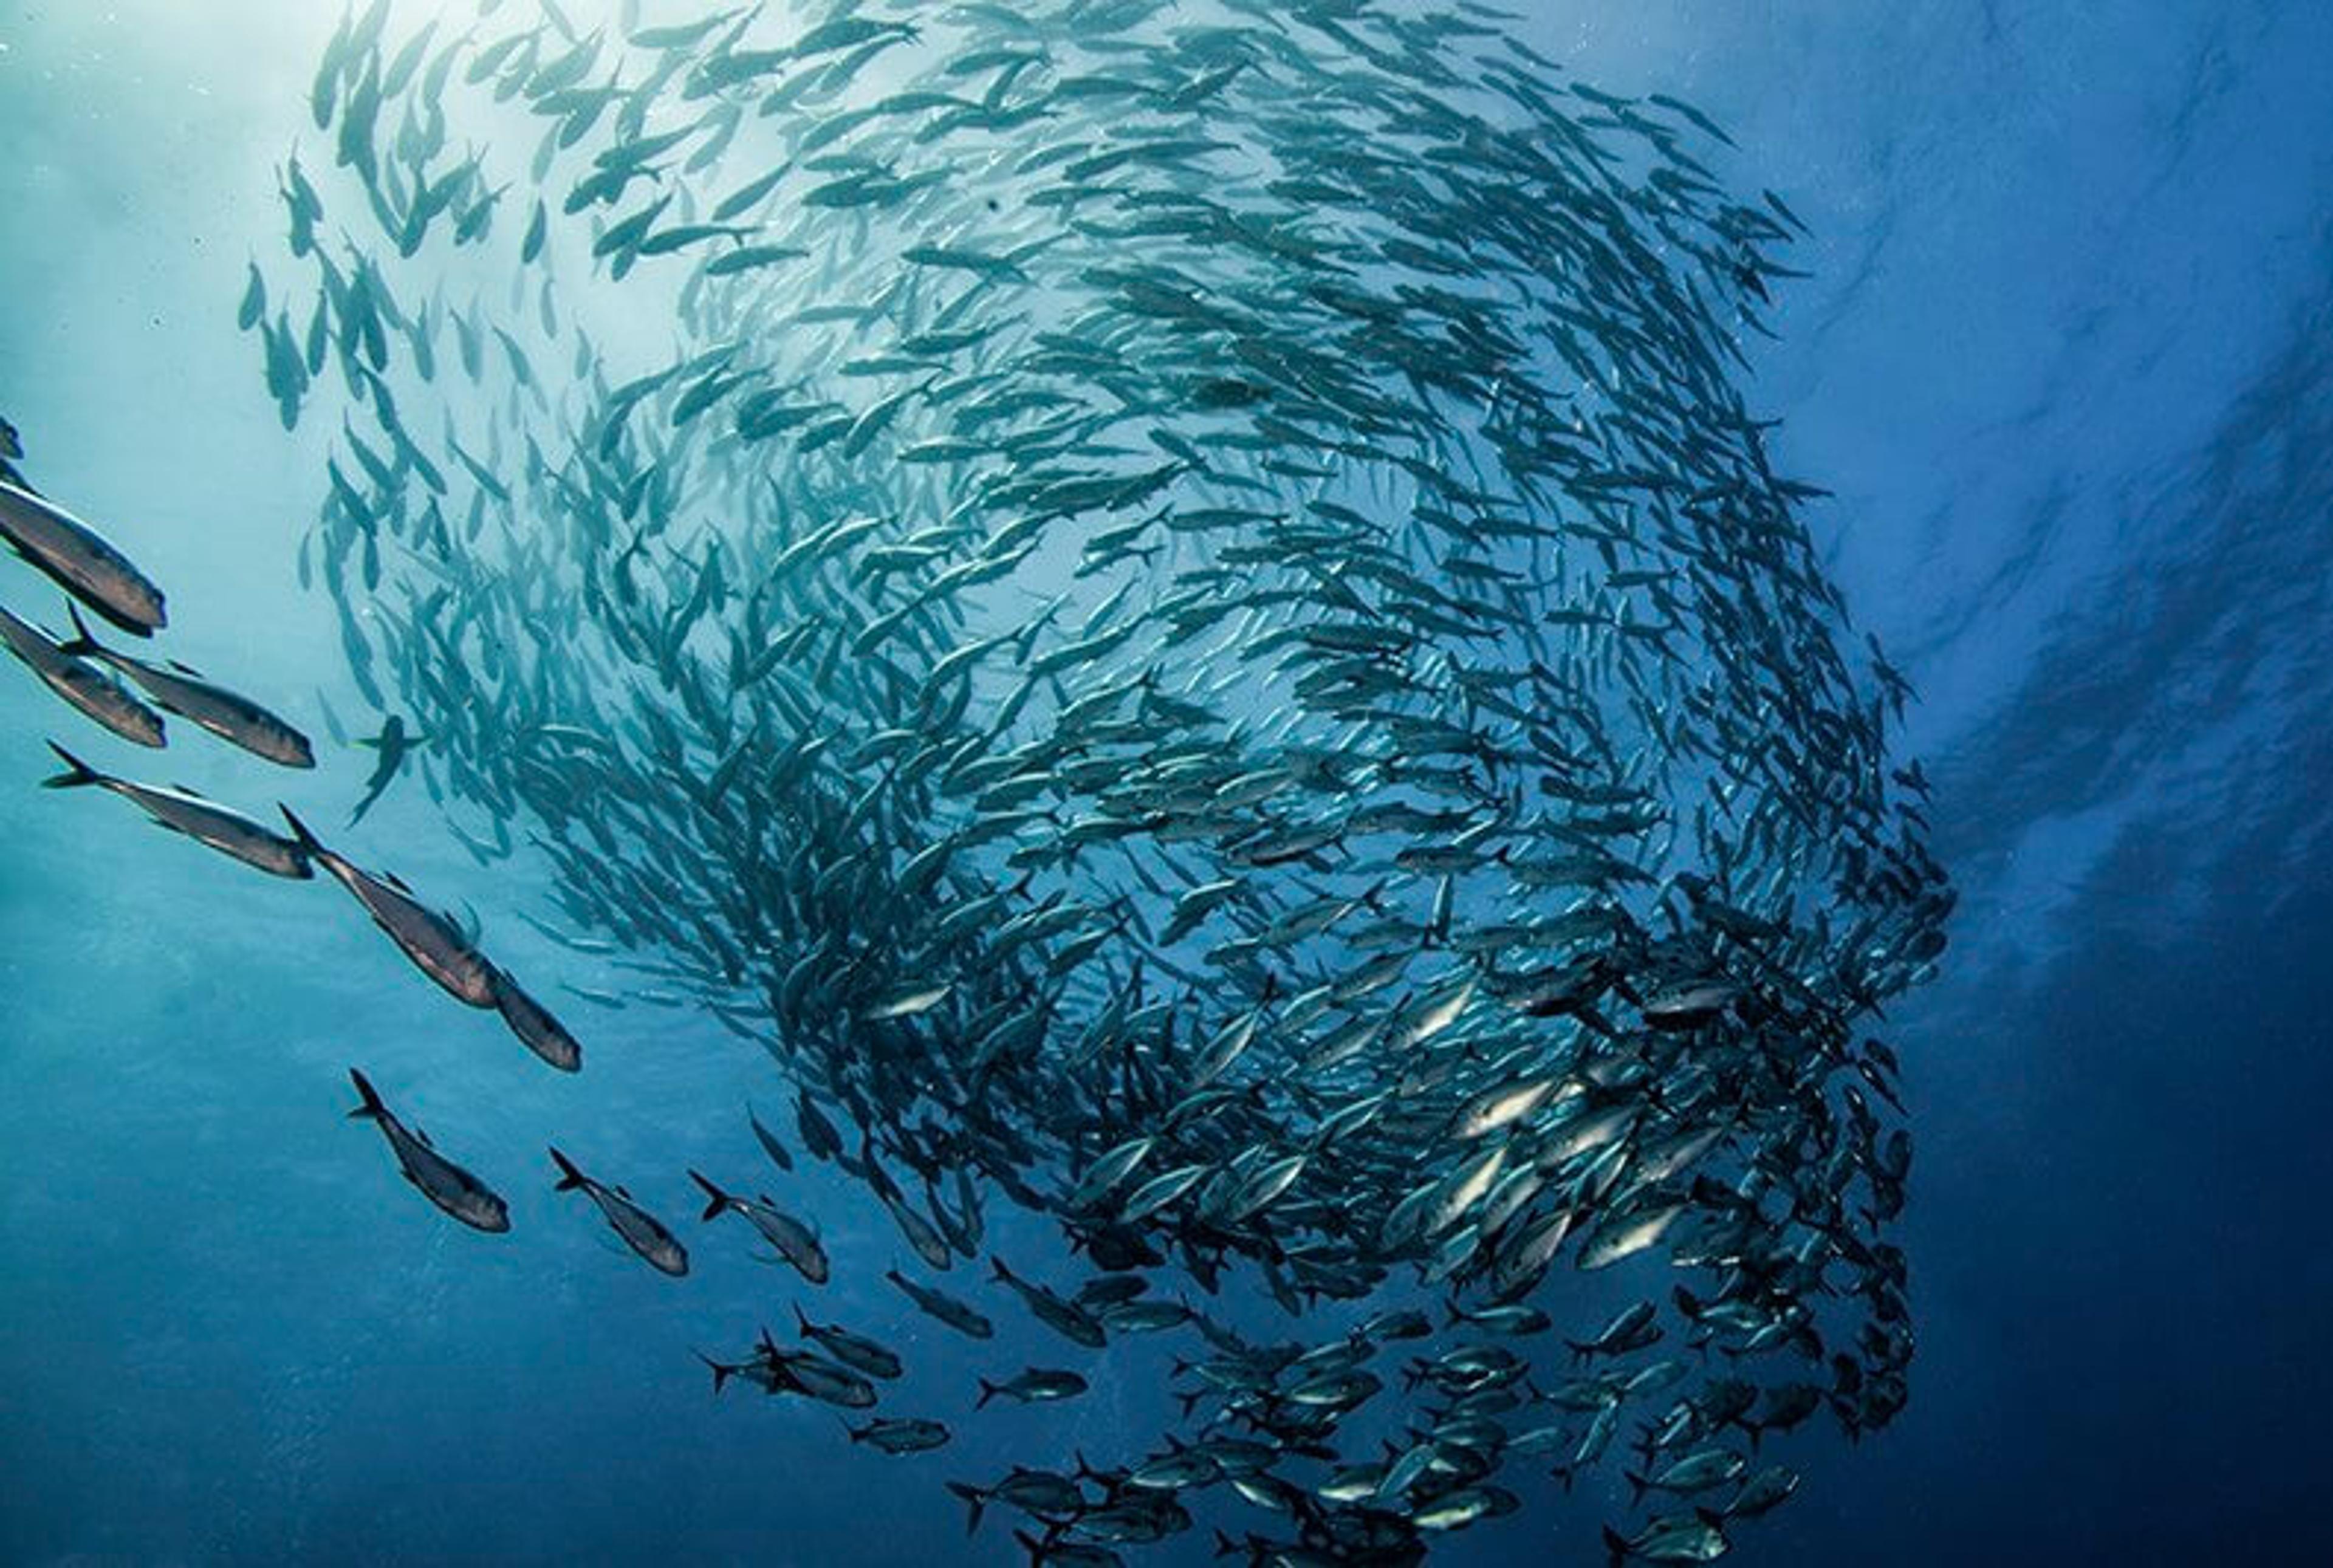 A school of fish in the ocean.